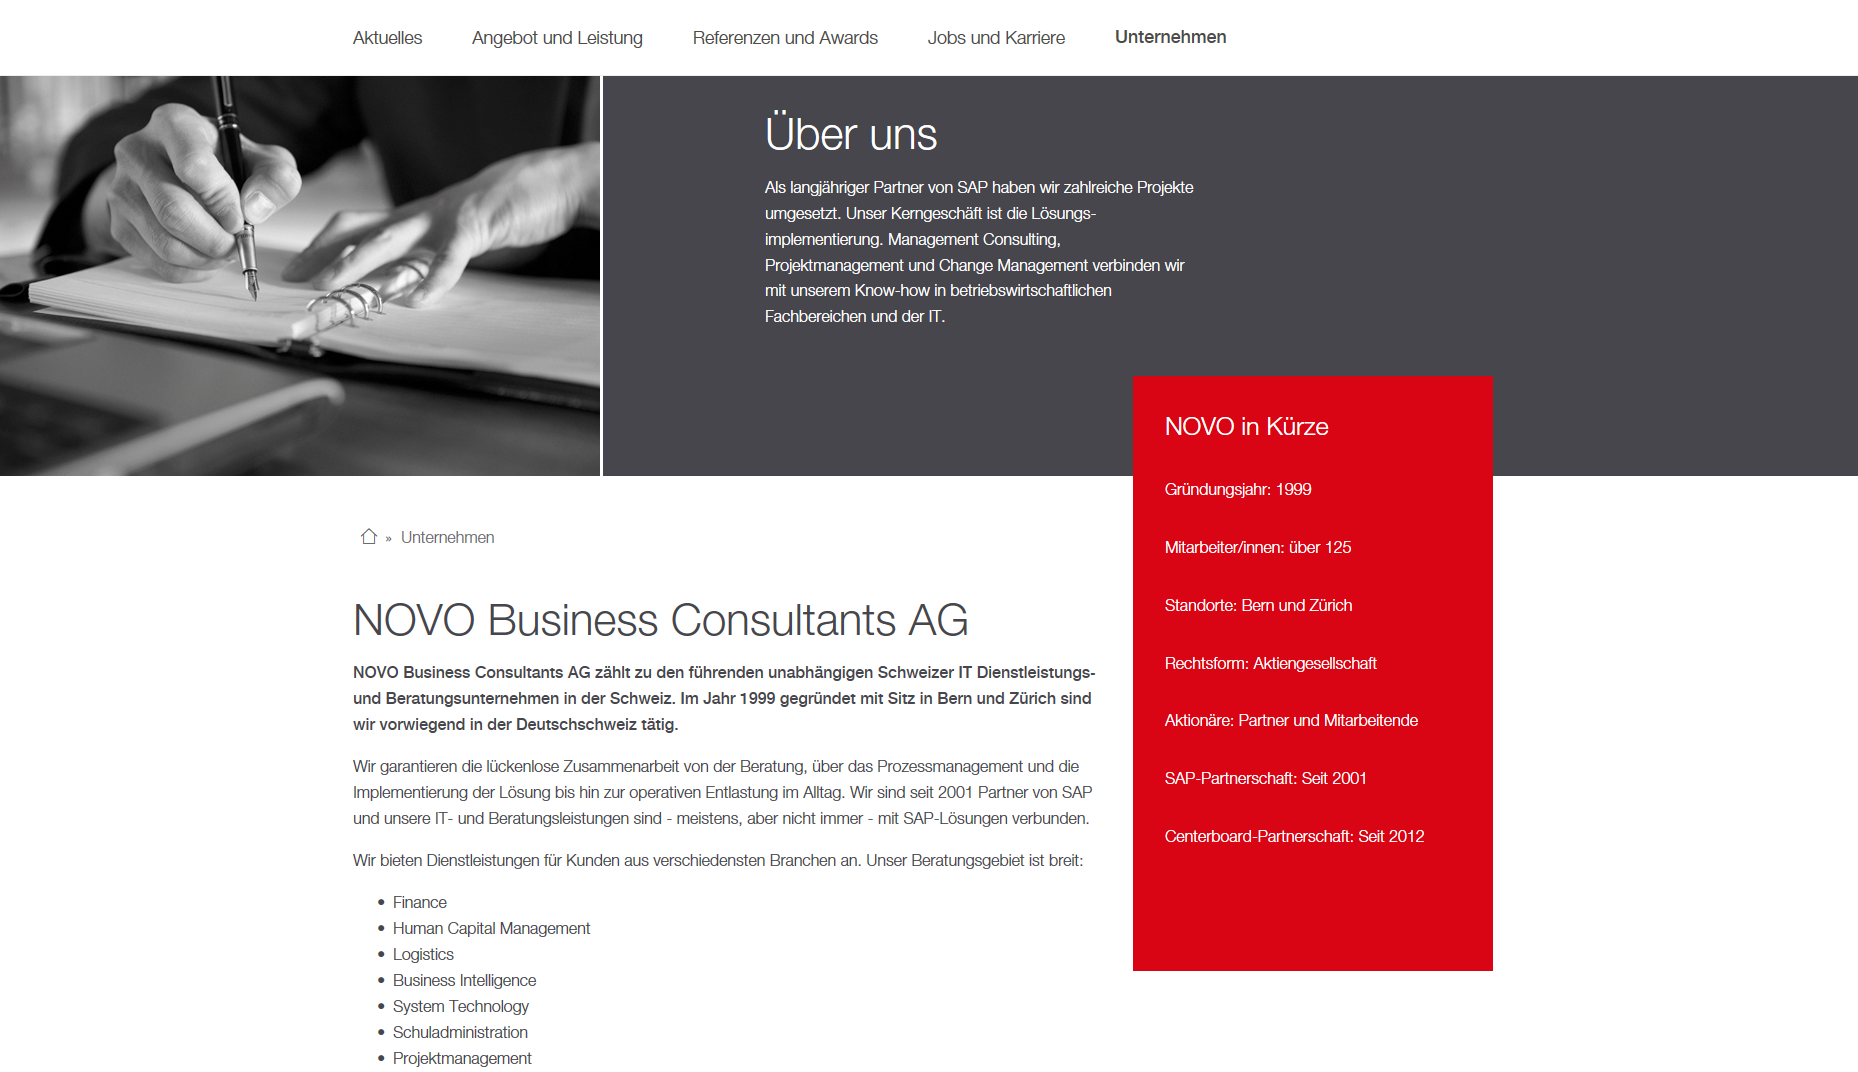 NOVO Business Consultants AG 2015